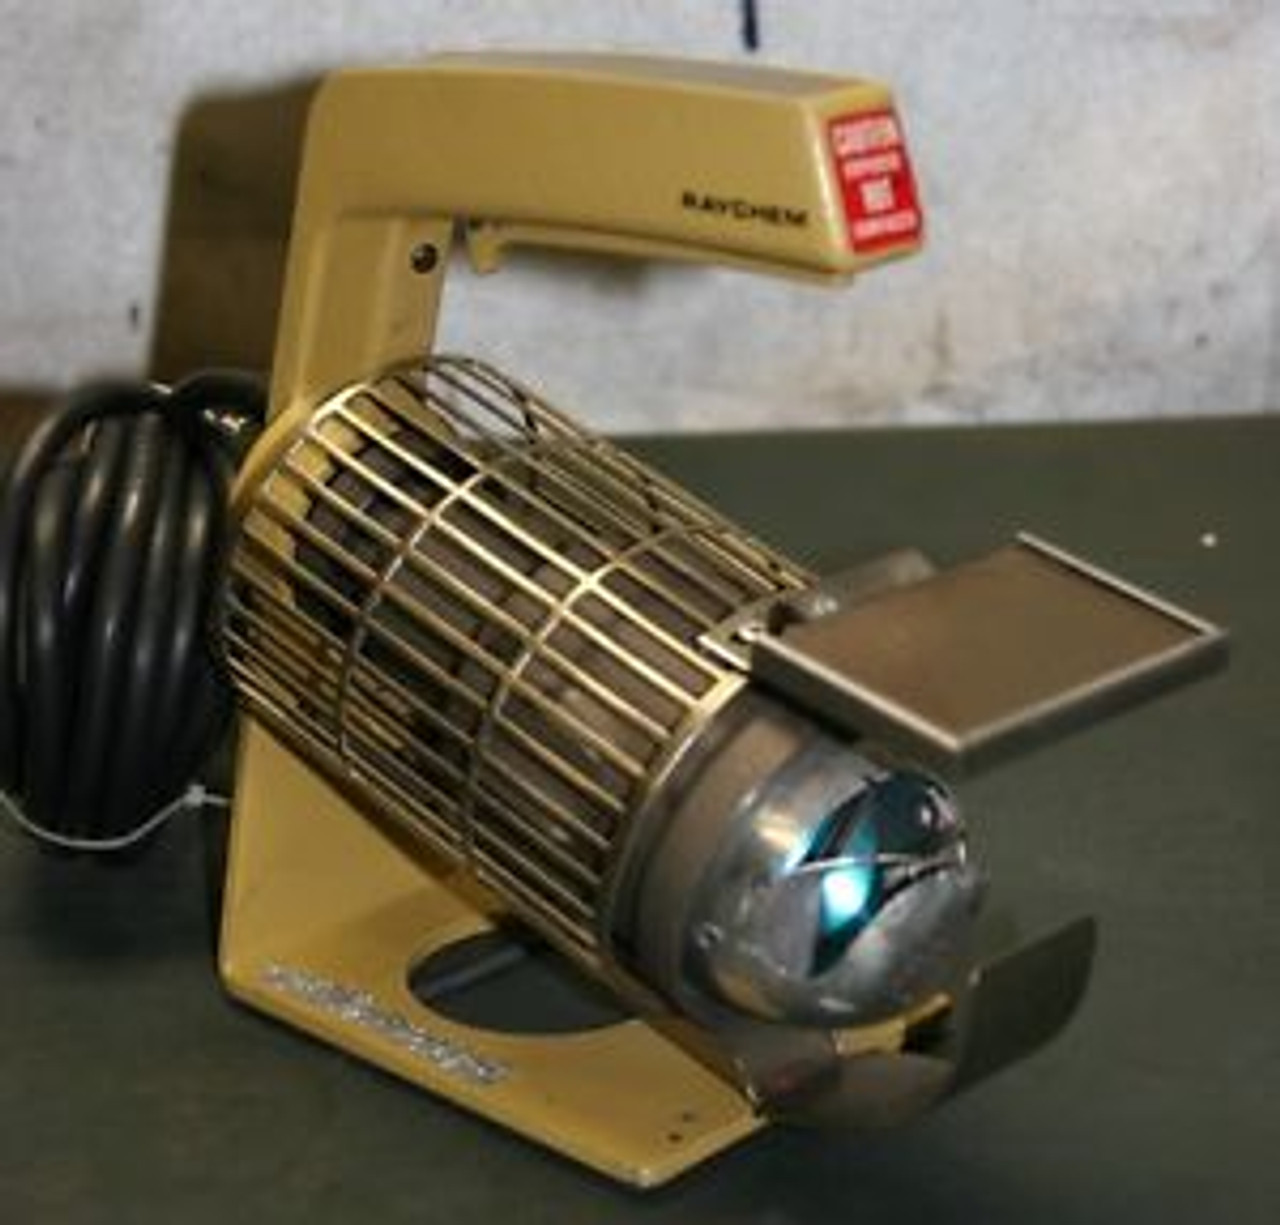 IR550 Infrared Heat Gun Mfg.: Raychem Condition: Used